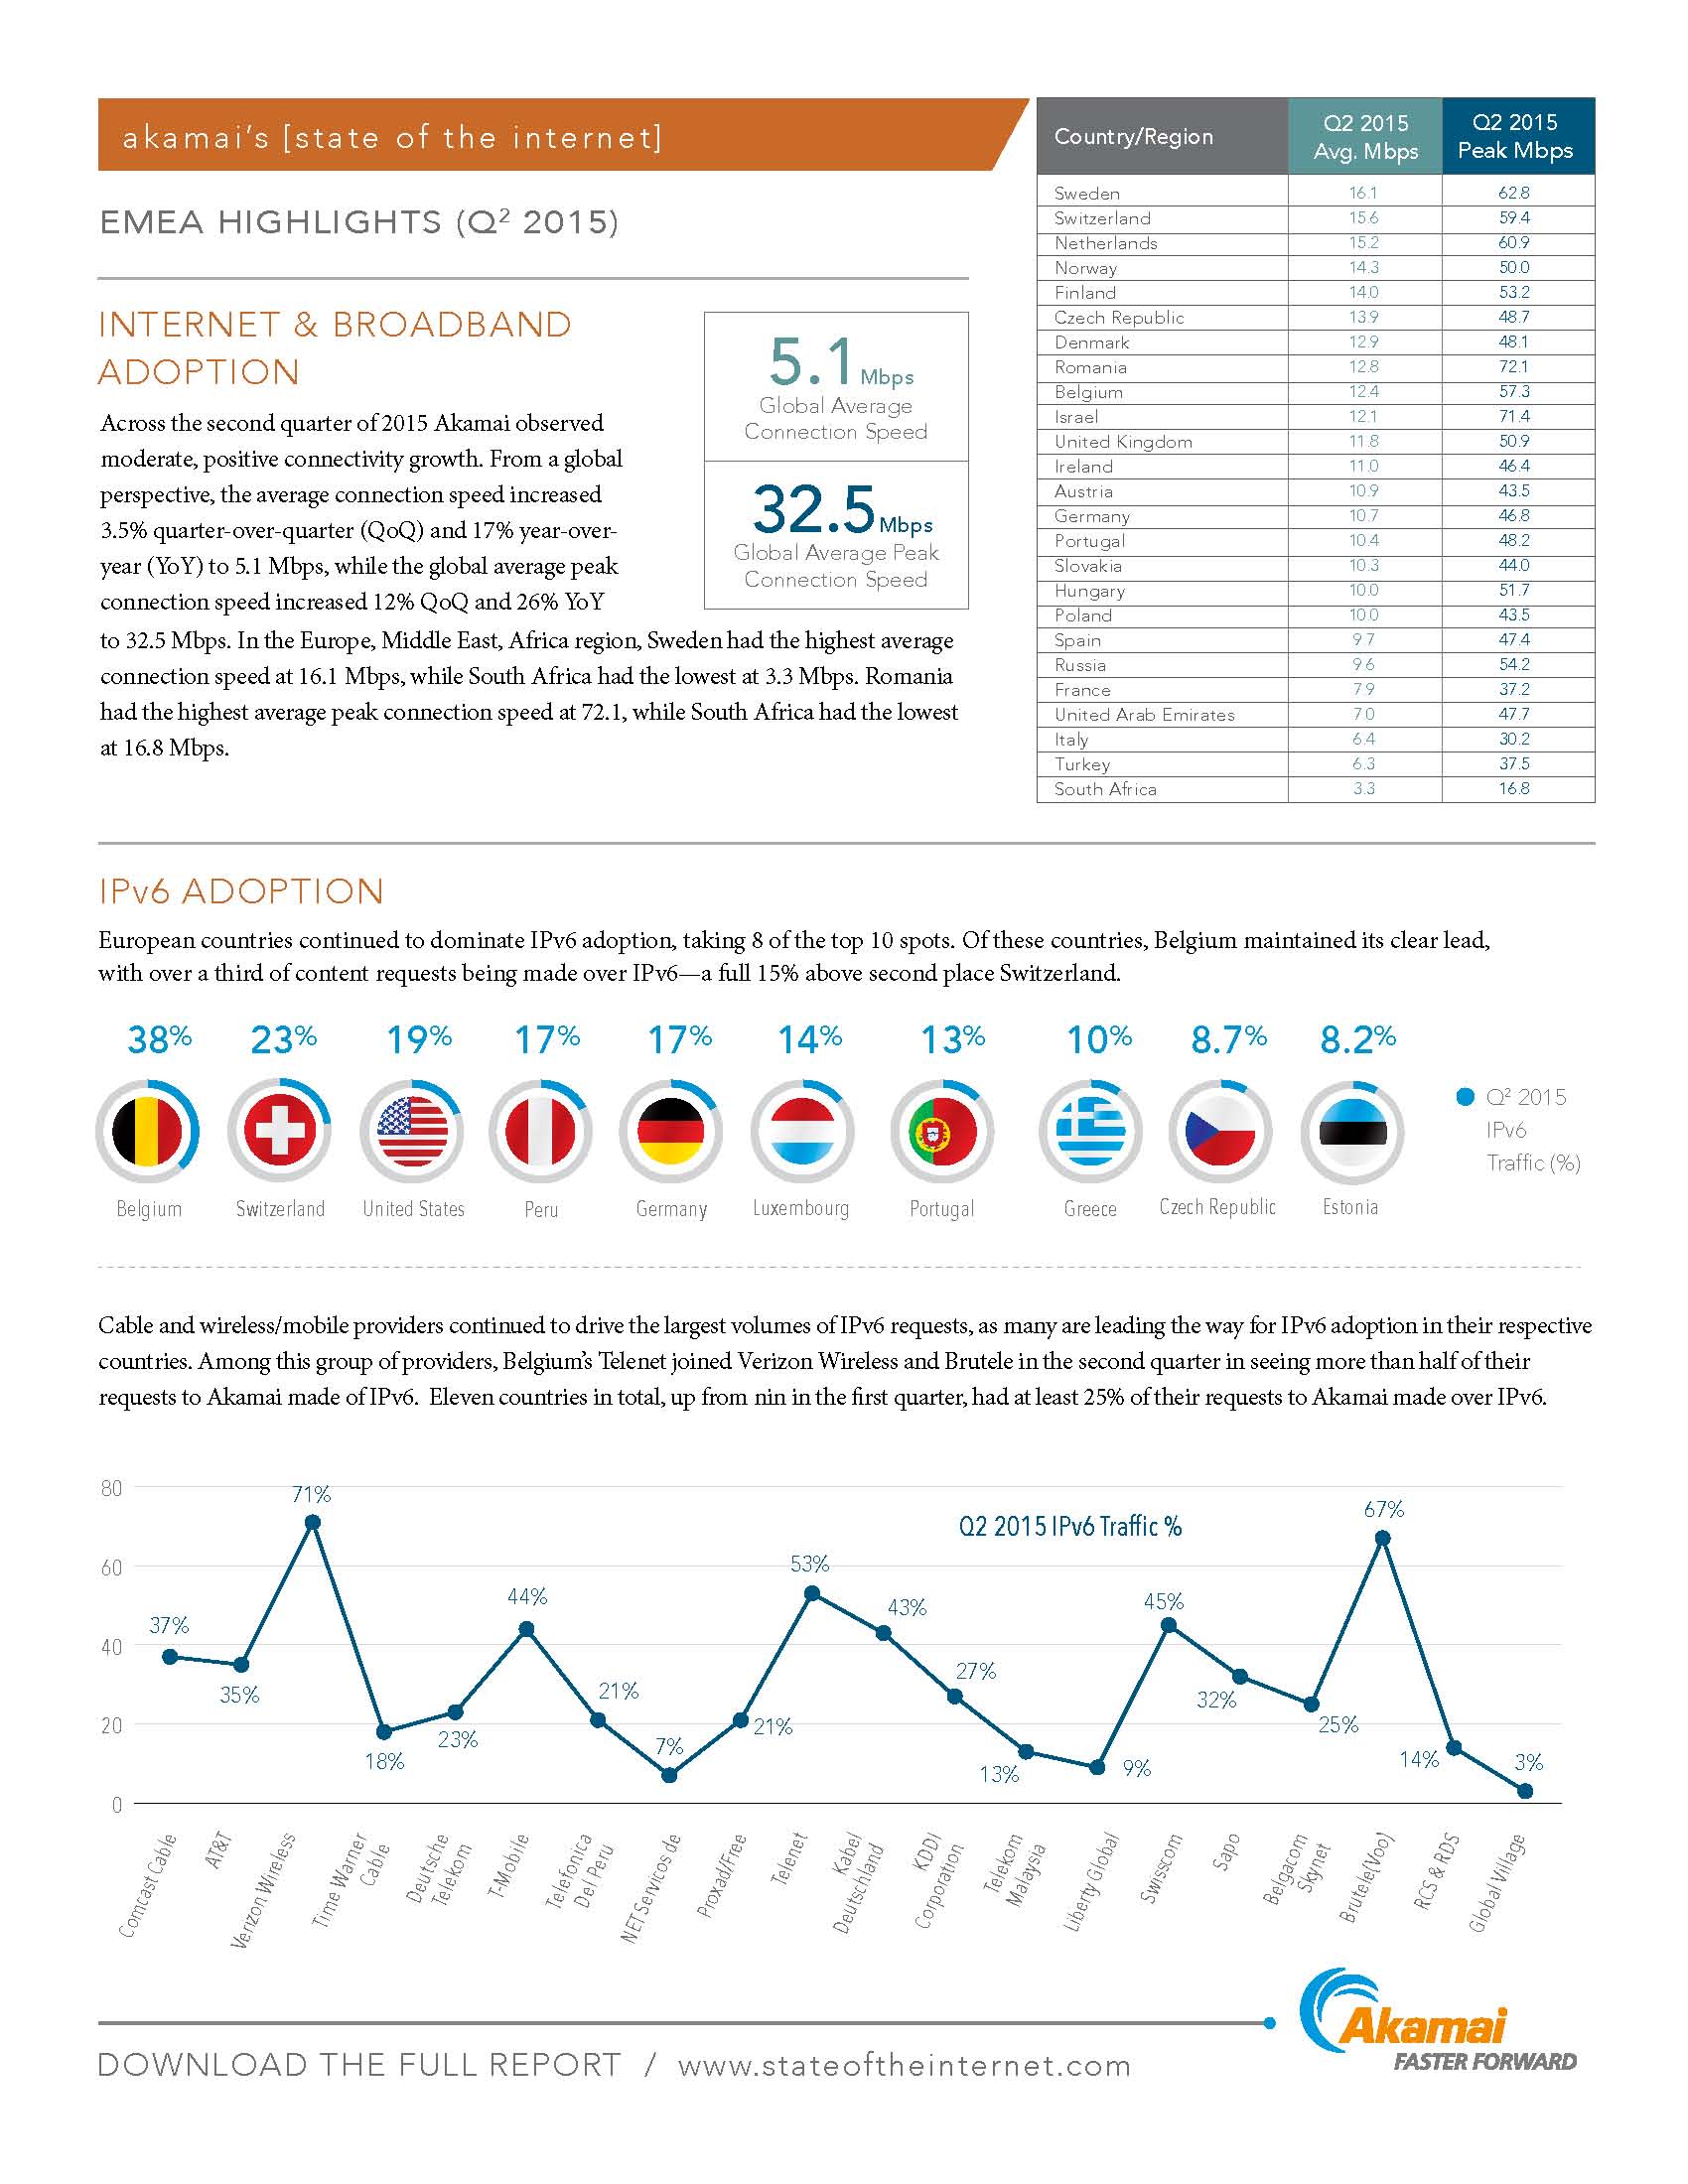 Q2 2015 SOTI Infographic EMEA